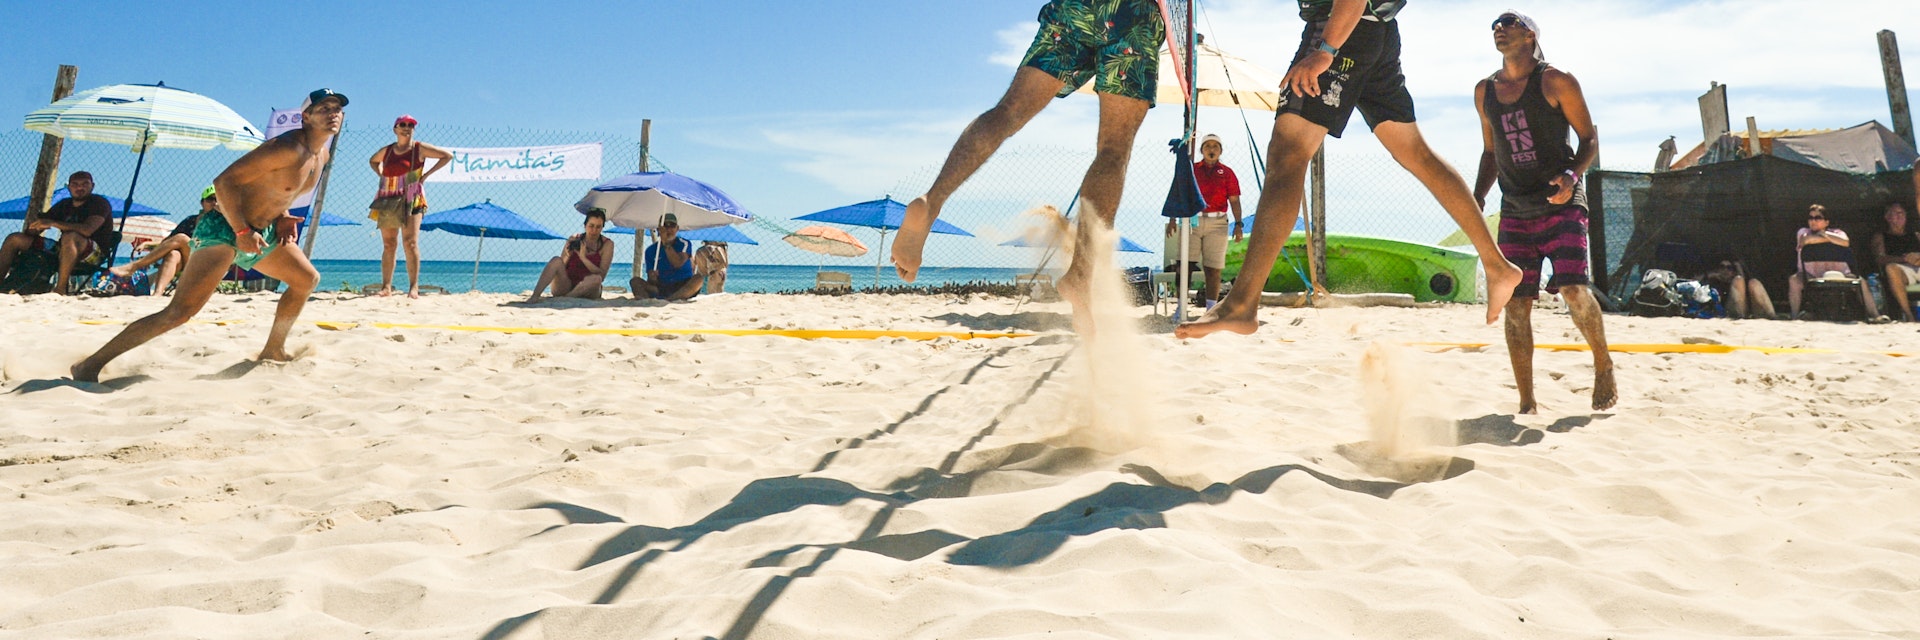 People playing beach volley in Playa Del Carmen.